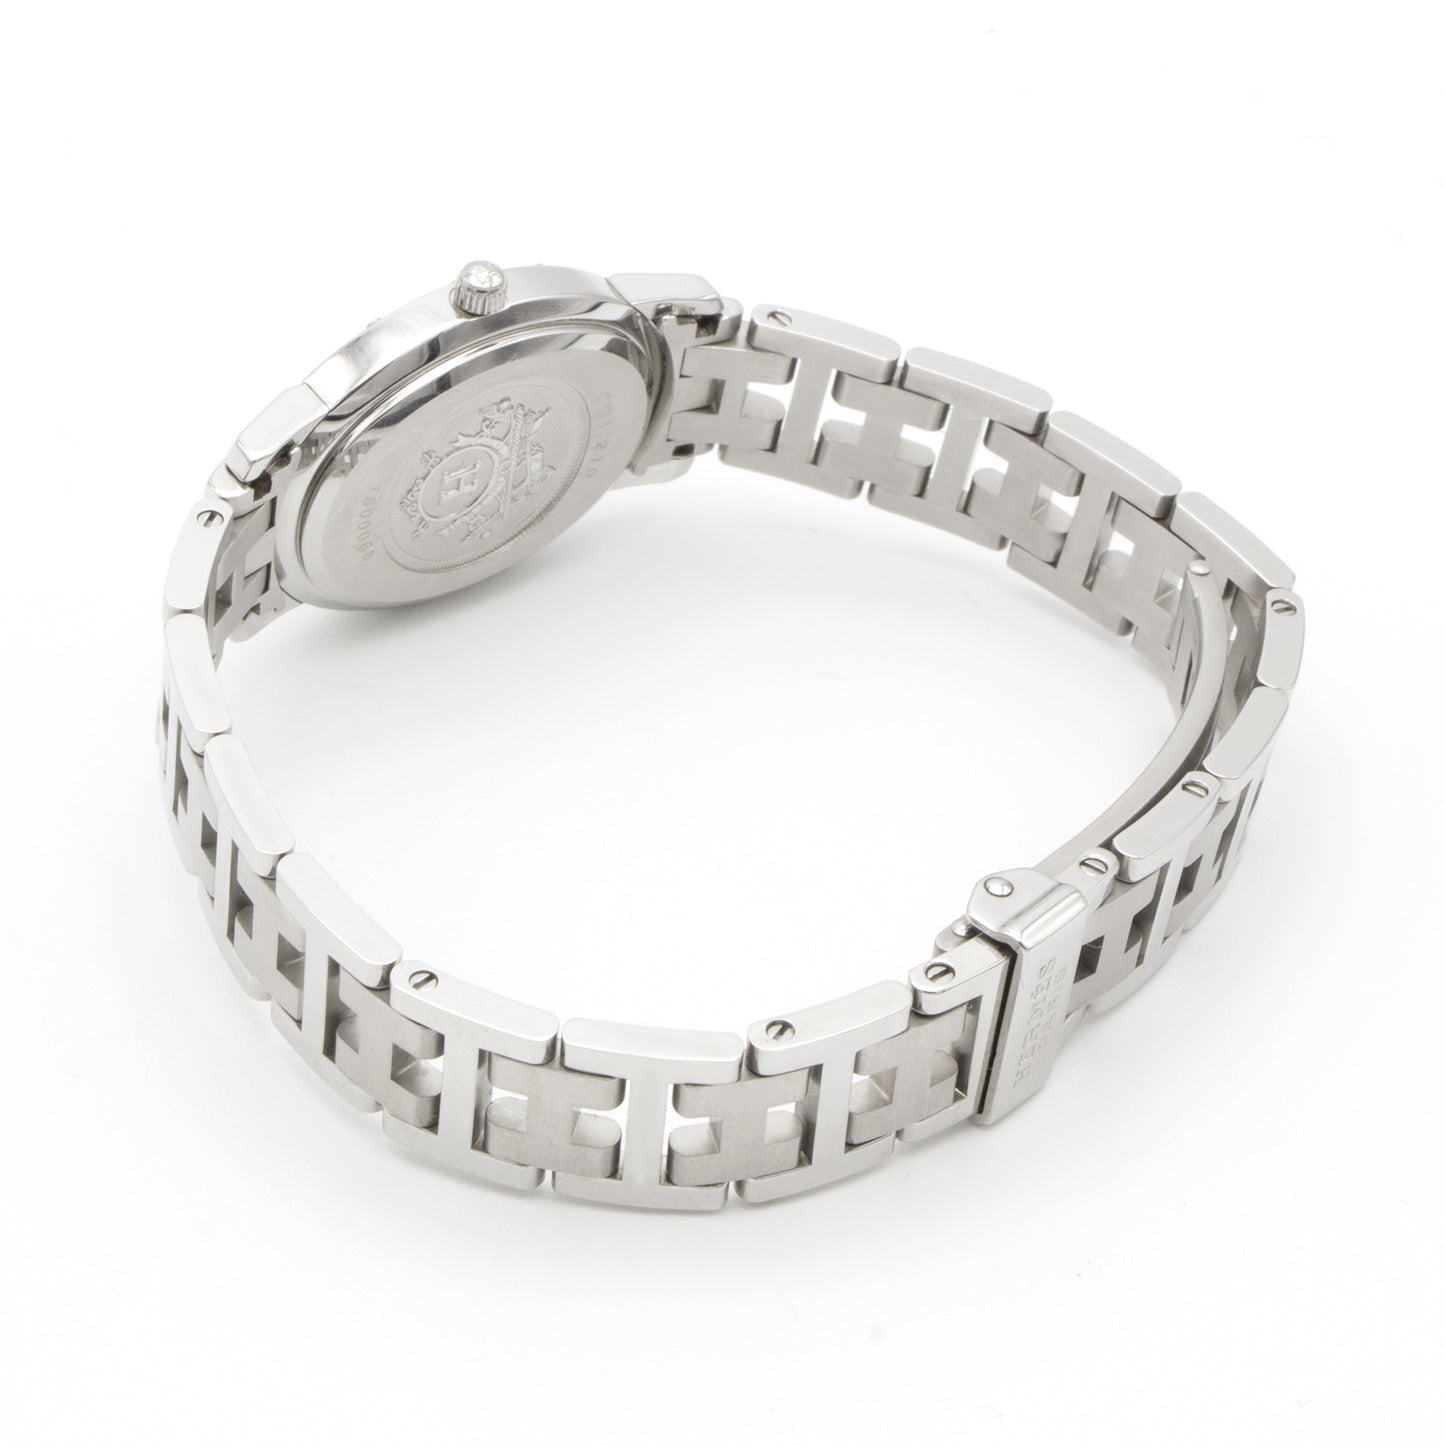 Hermès Clipper Oval CO1.210 watch